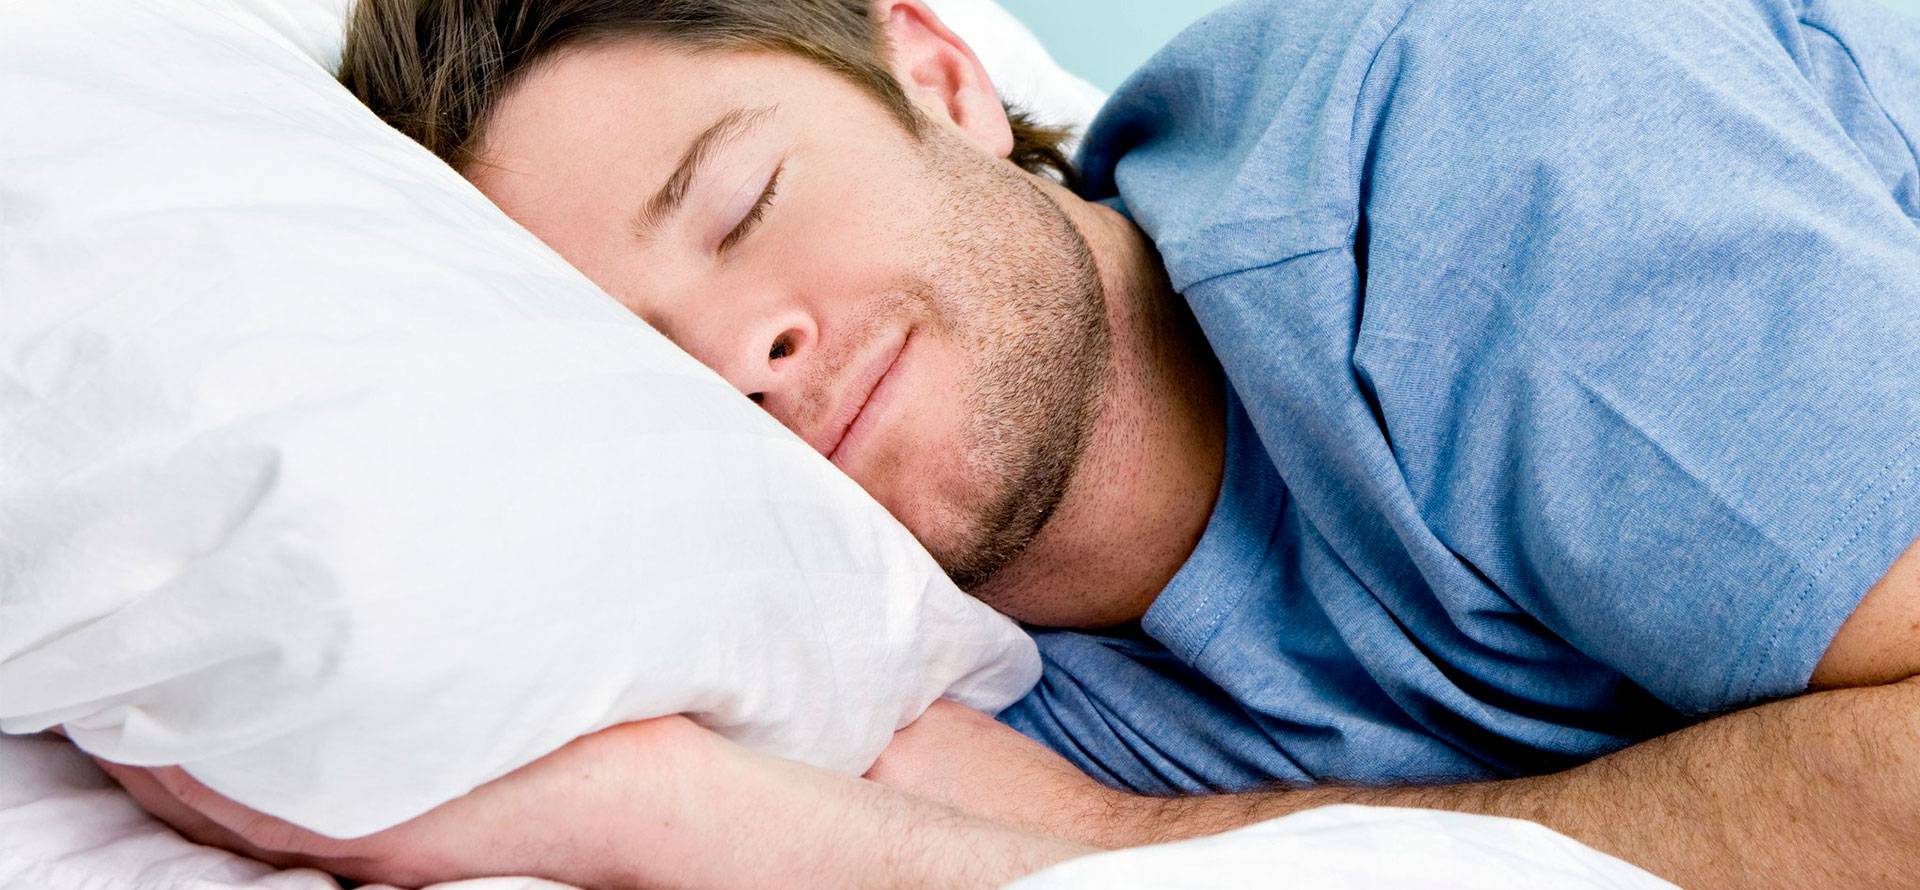 The man happily sleeps on an orthopedic mattress.